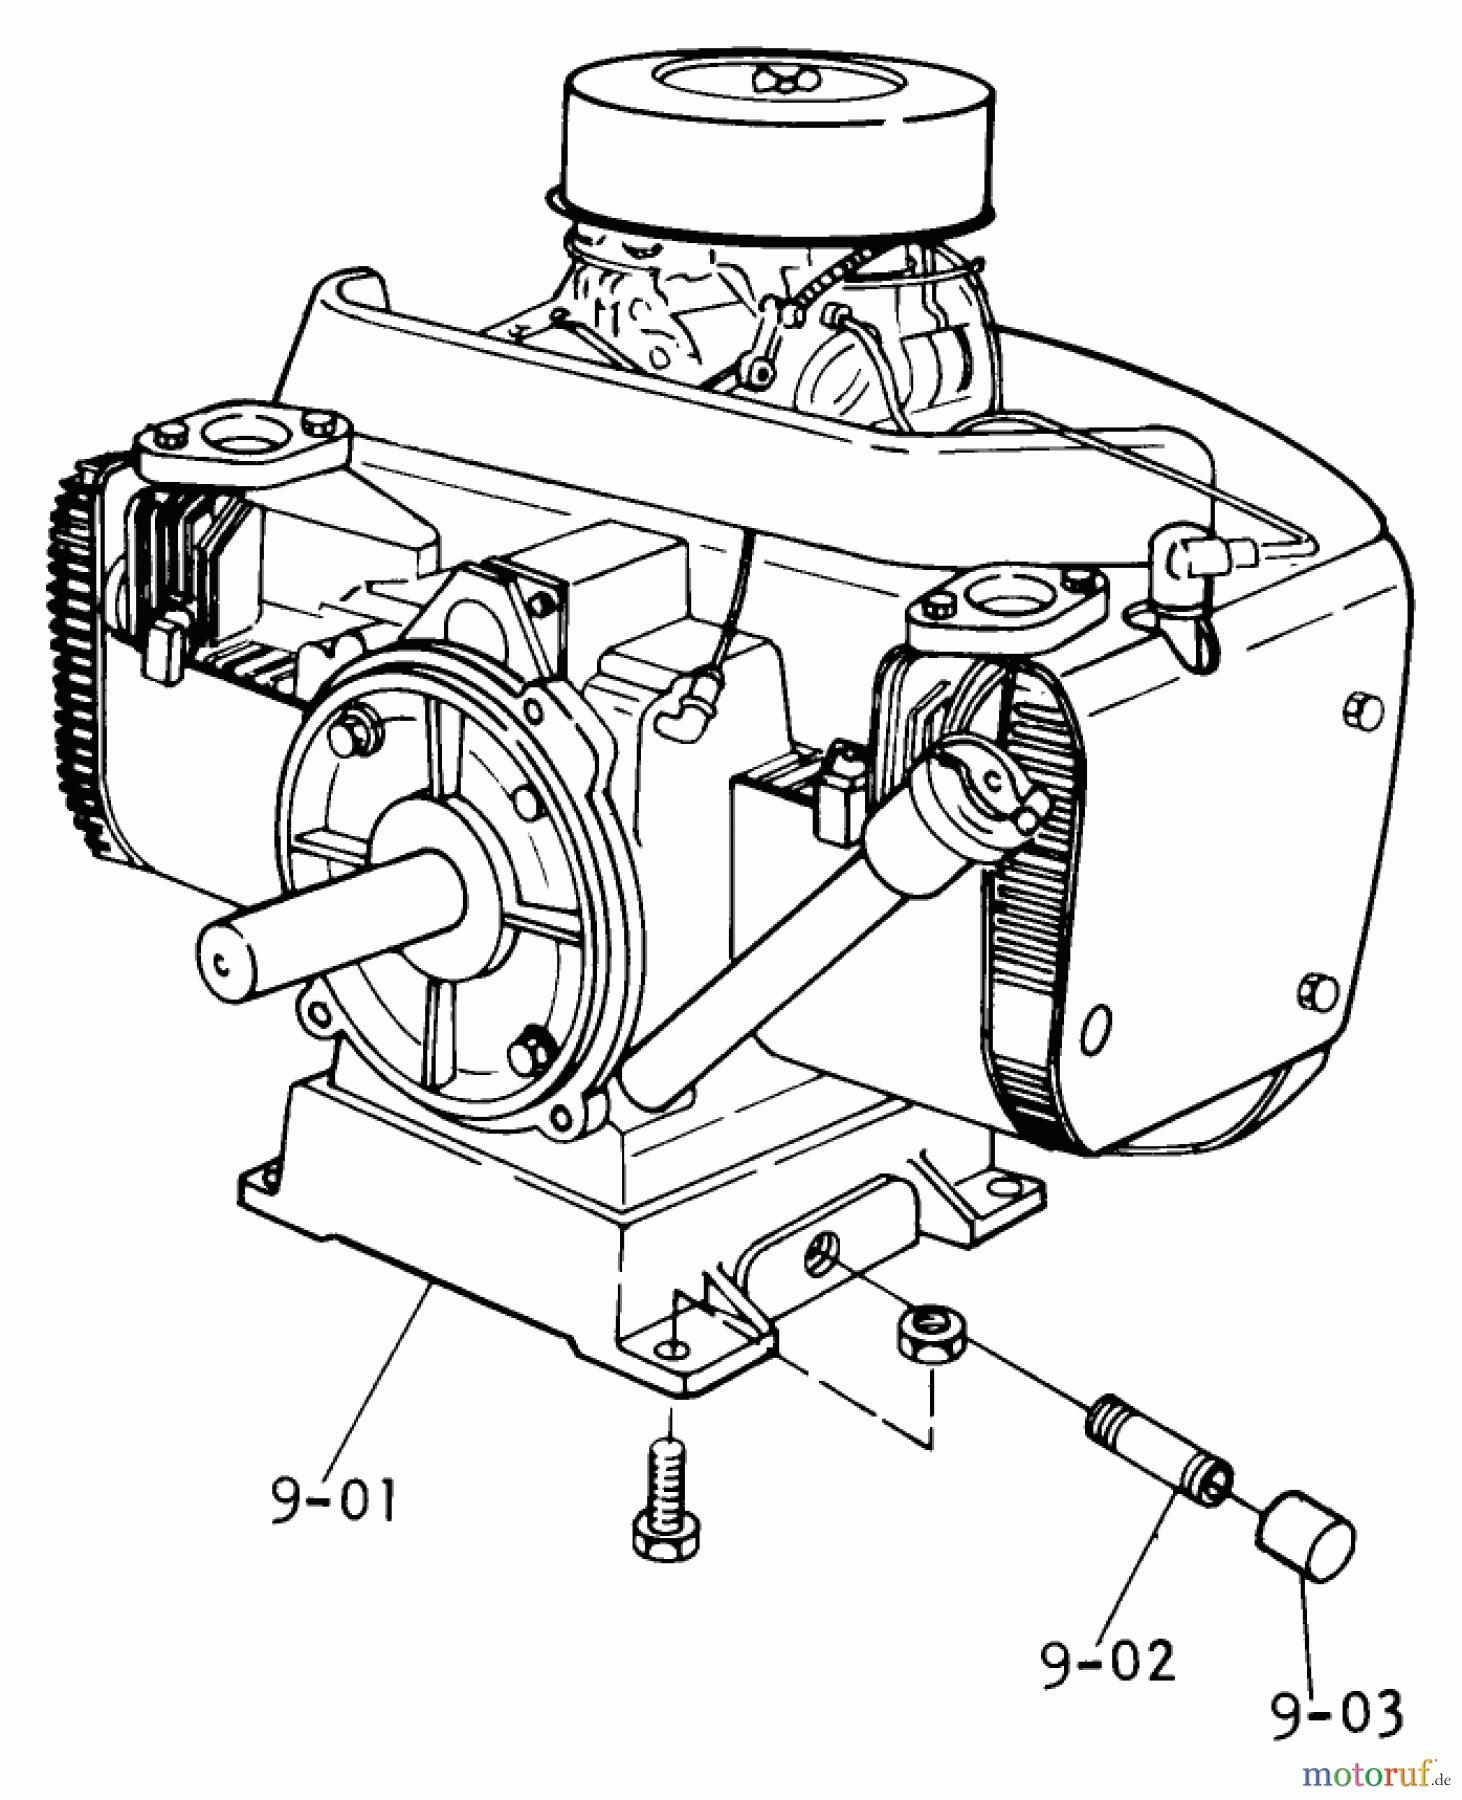  Toro Neu Mowers, Lawn & Garden Tractor Seite 1 1-0620 - Toro 18 hp AutomaticTractor, 1973 ENGINE